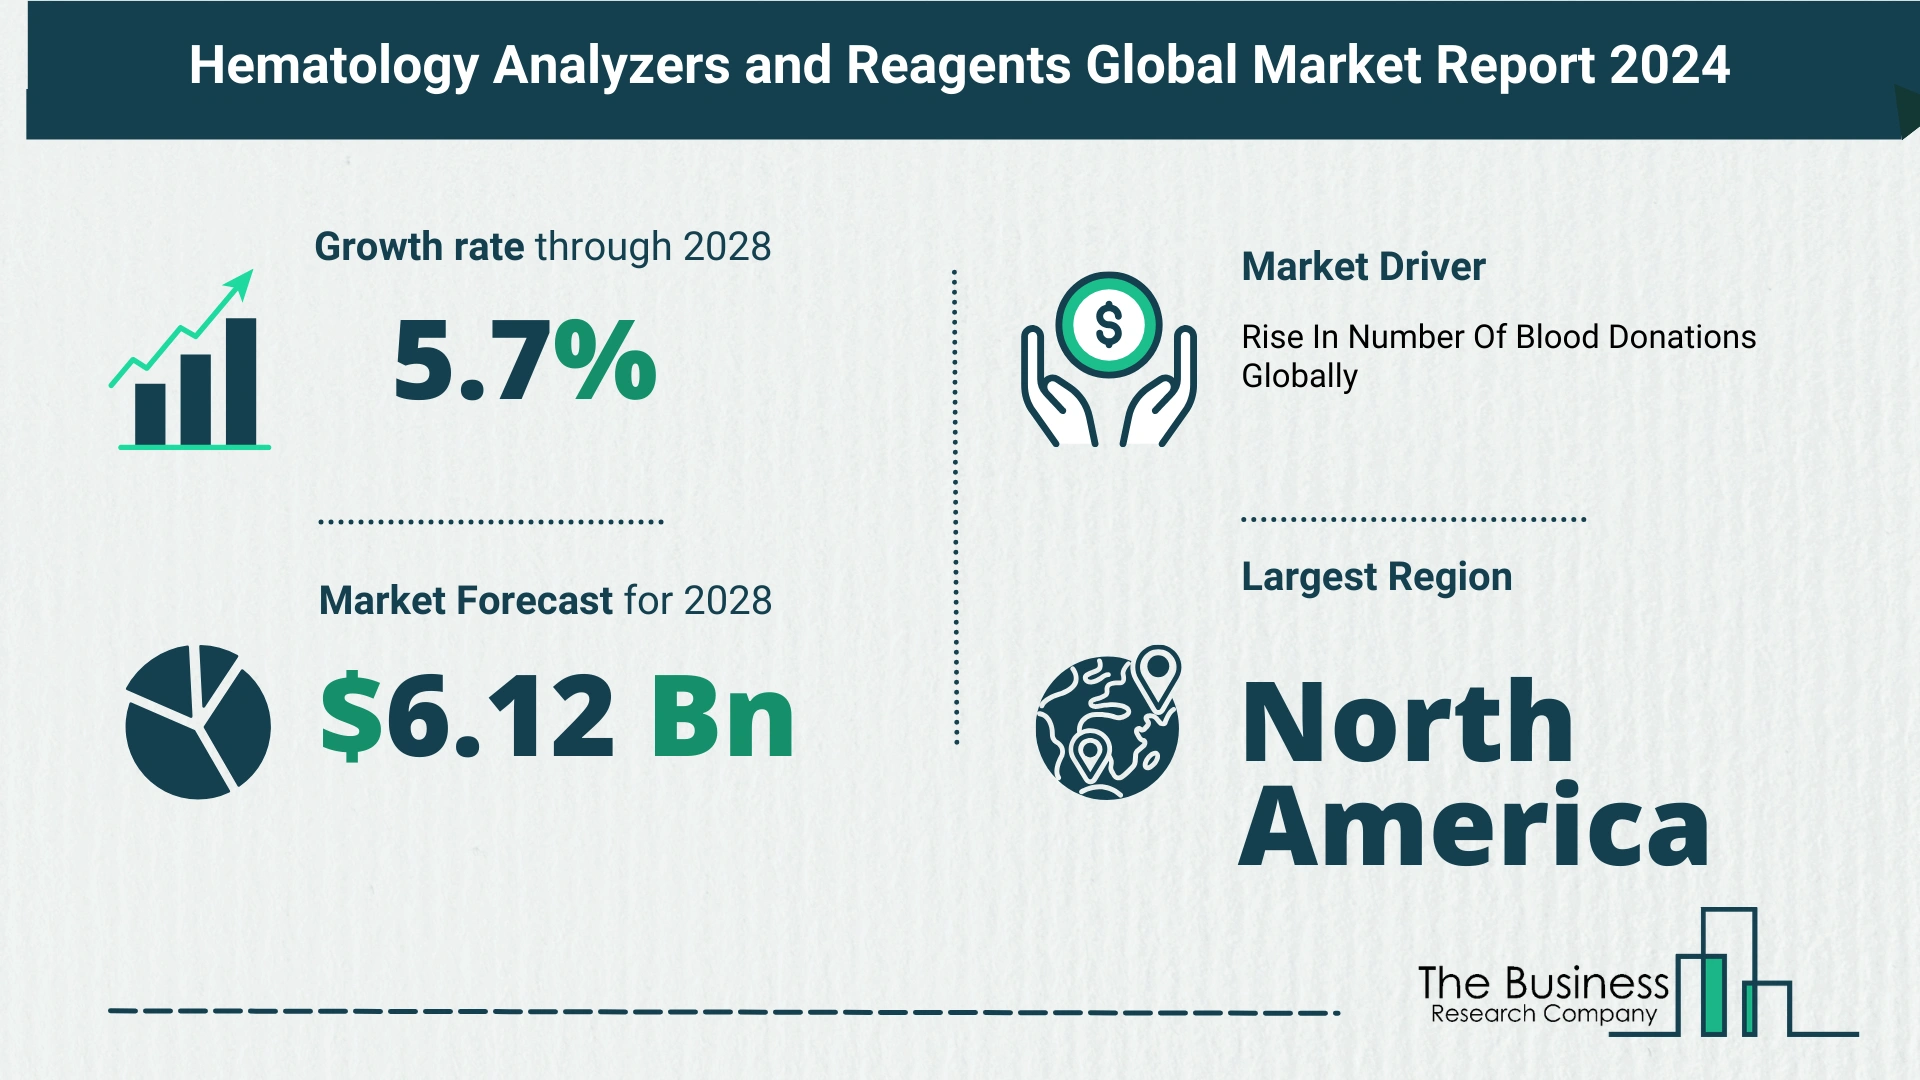 Global Hematology Analyzers and Reagents Market Size